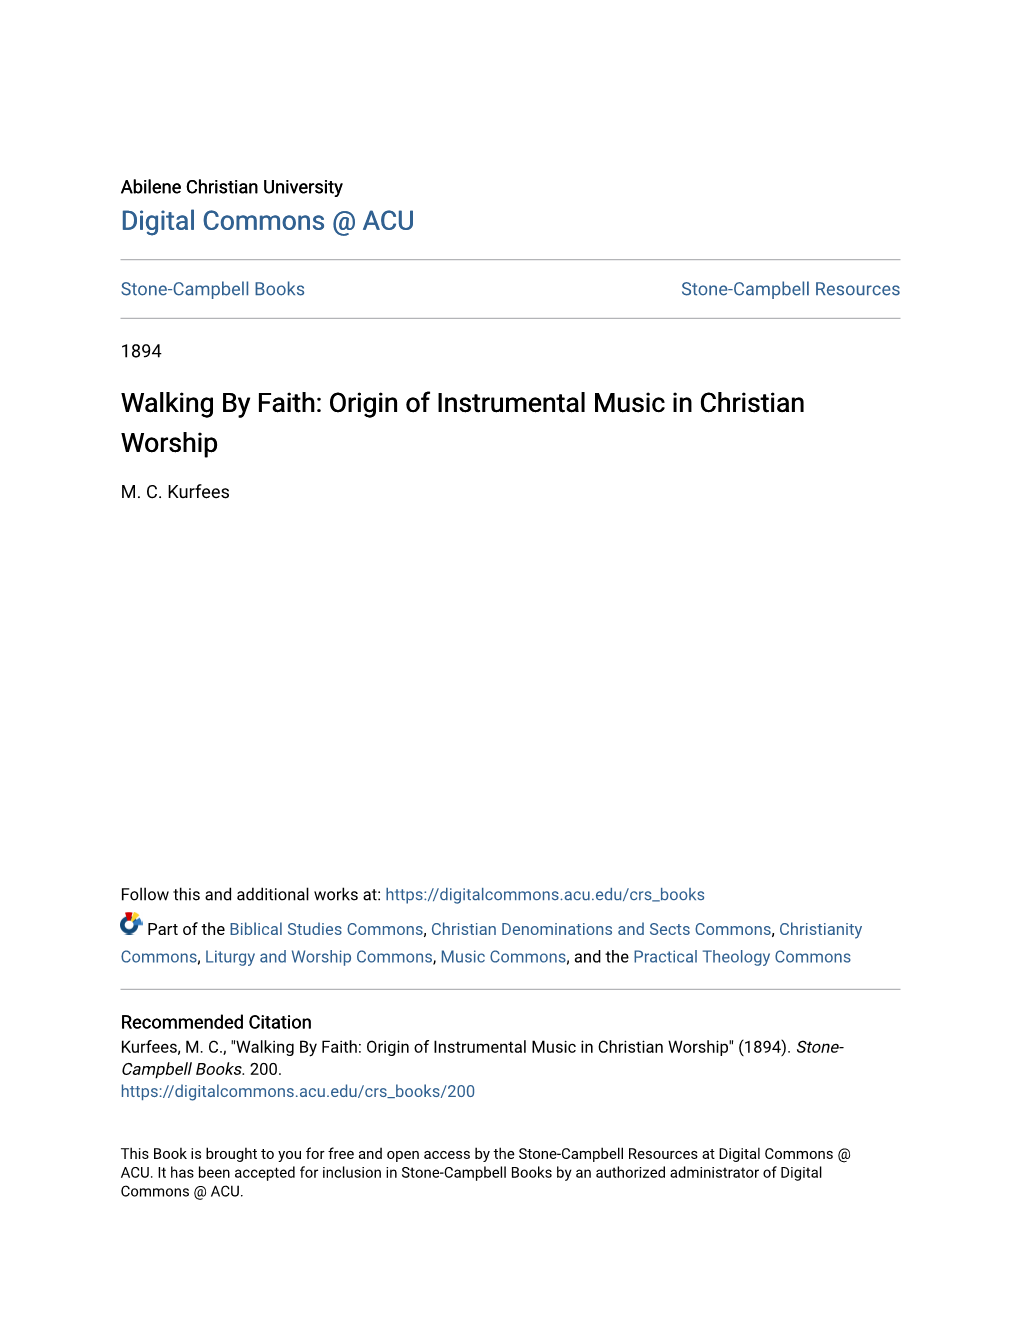 Origin of Instrumental Music in Christian Worship